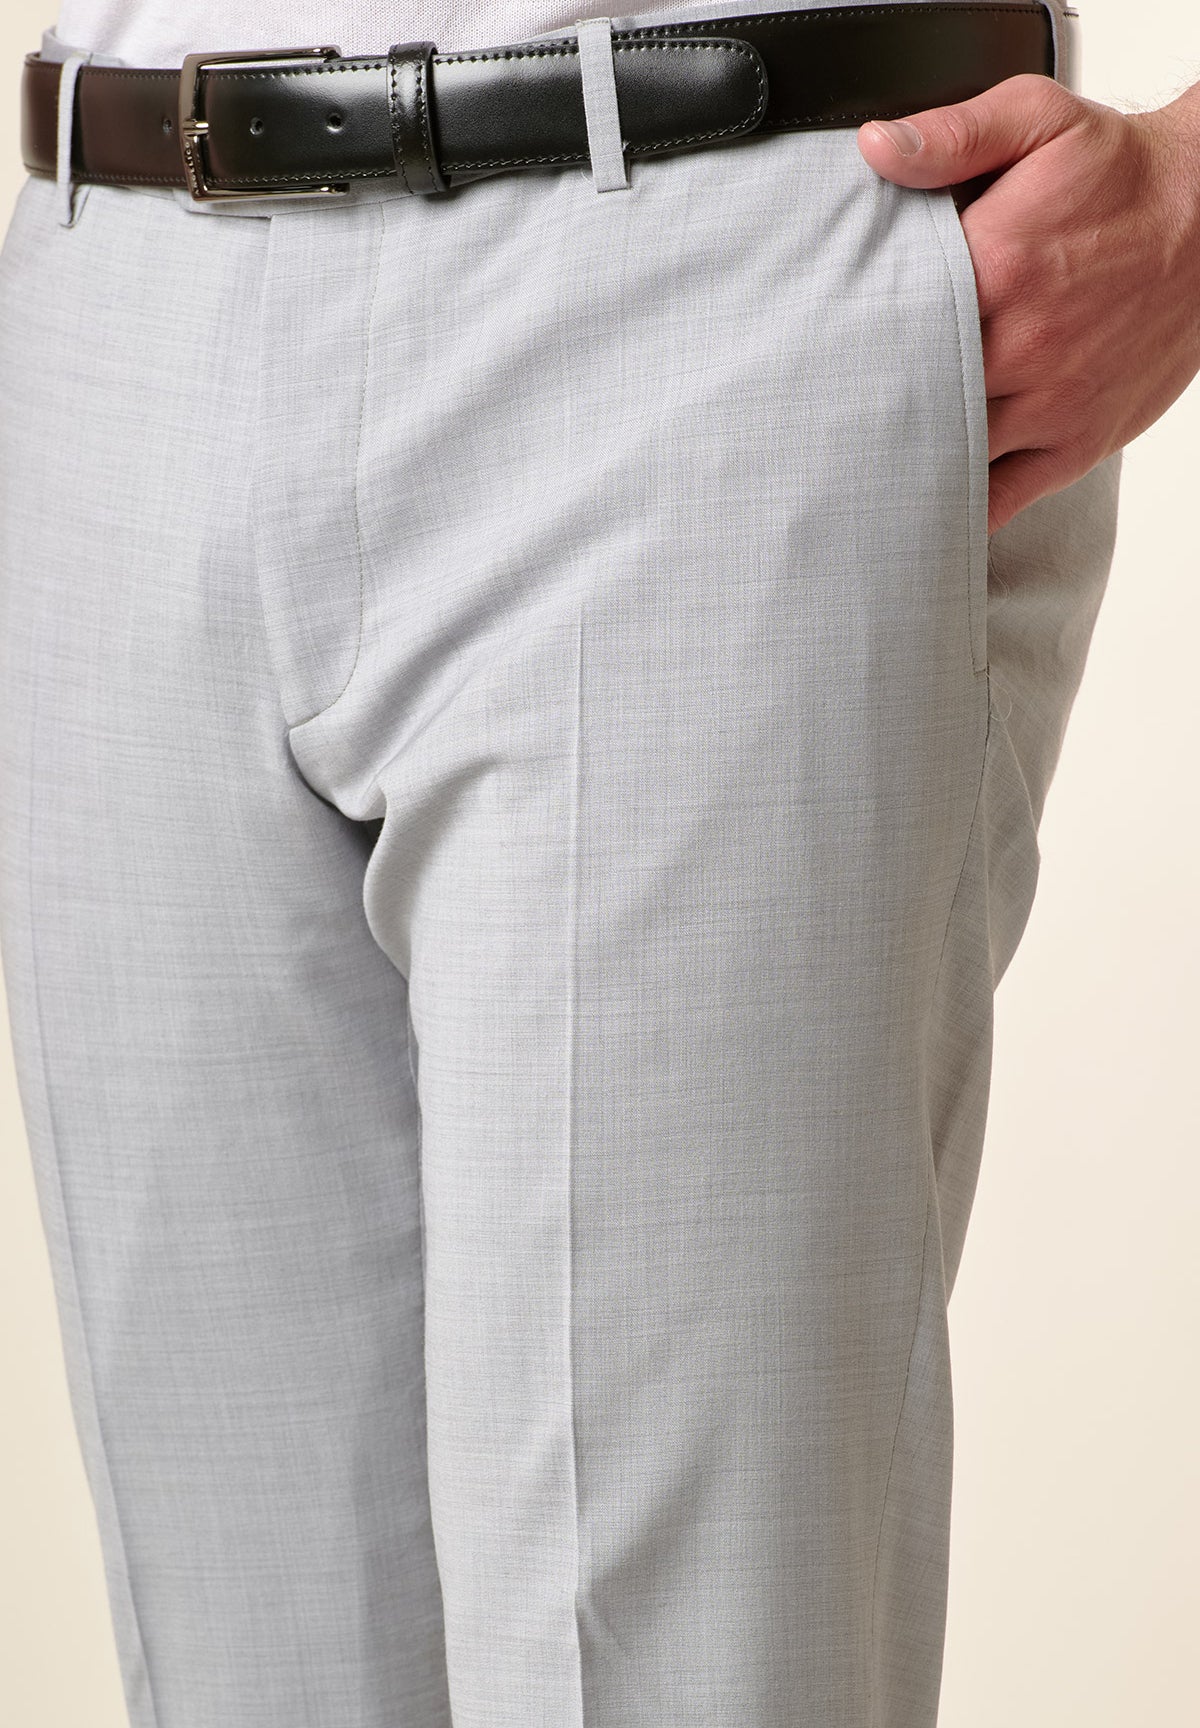 Pantalone grigio chiaro tela lana stretch custom fit